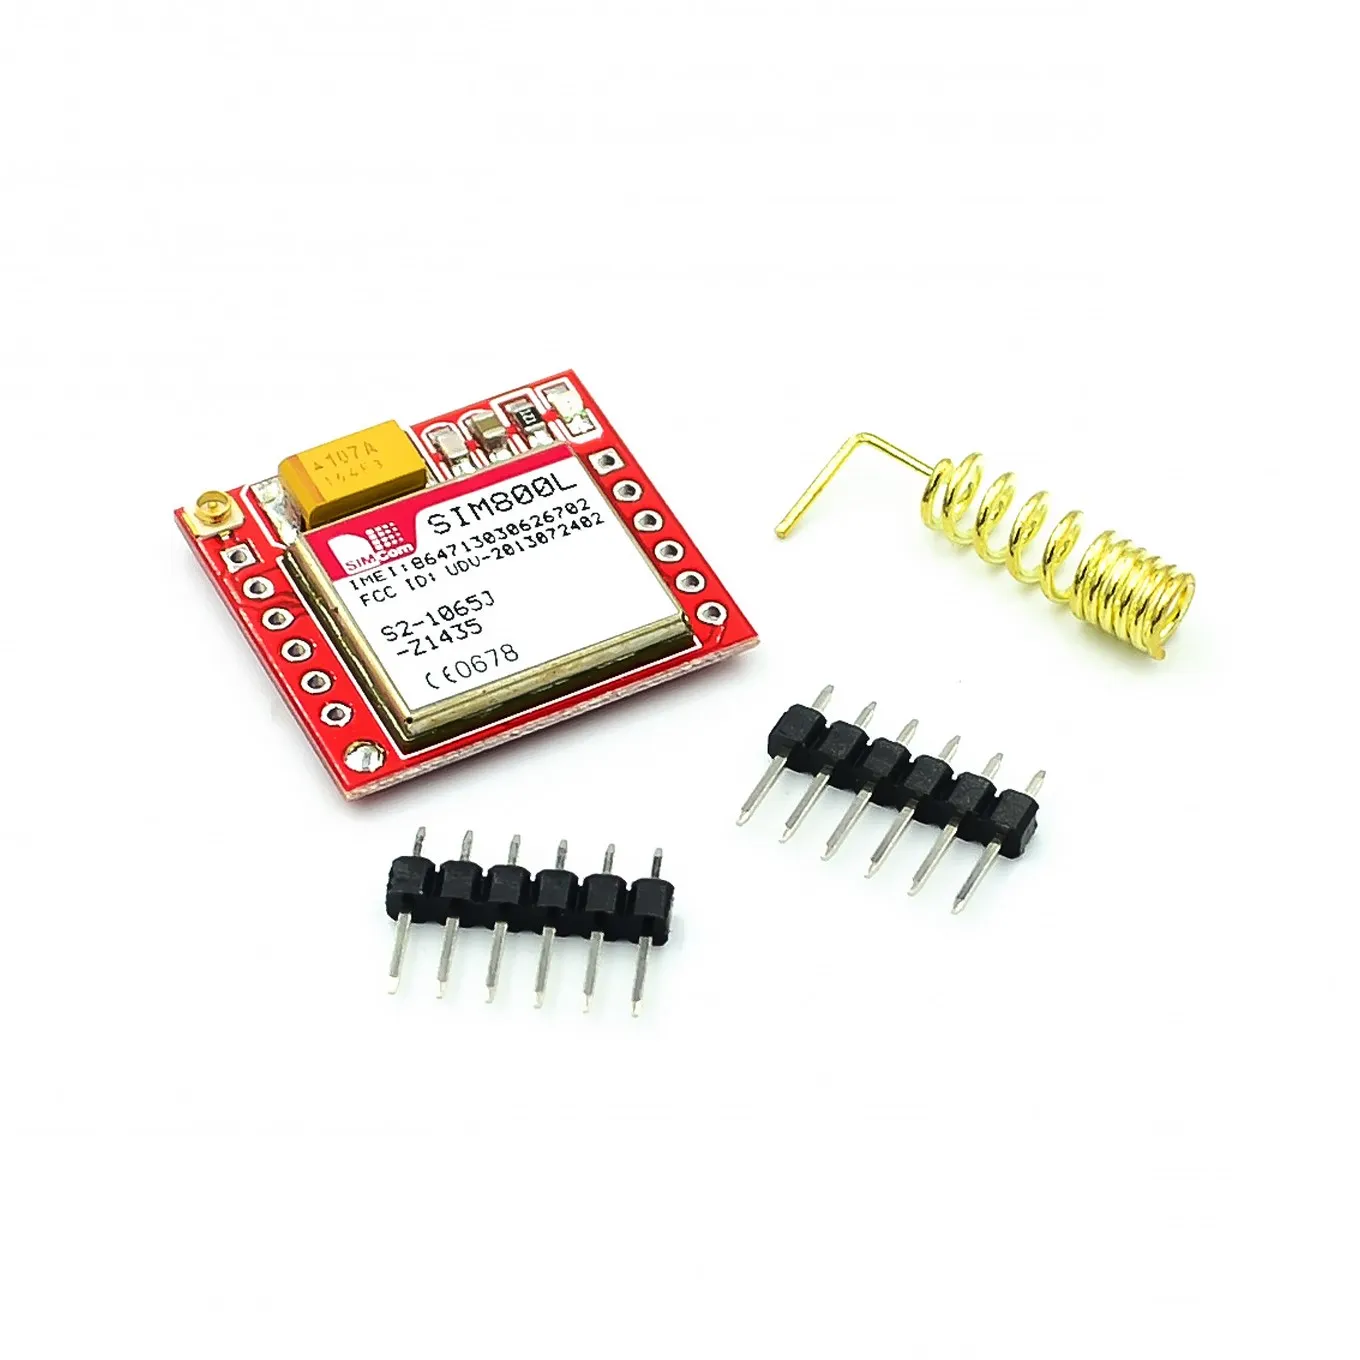 SIMPLE ROBOT】Smallest SIM800L GPRS GSM Module MicroSIM Core BOard Quad-band TTL Serial Port with the _ - Mobile